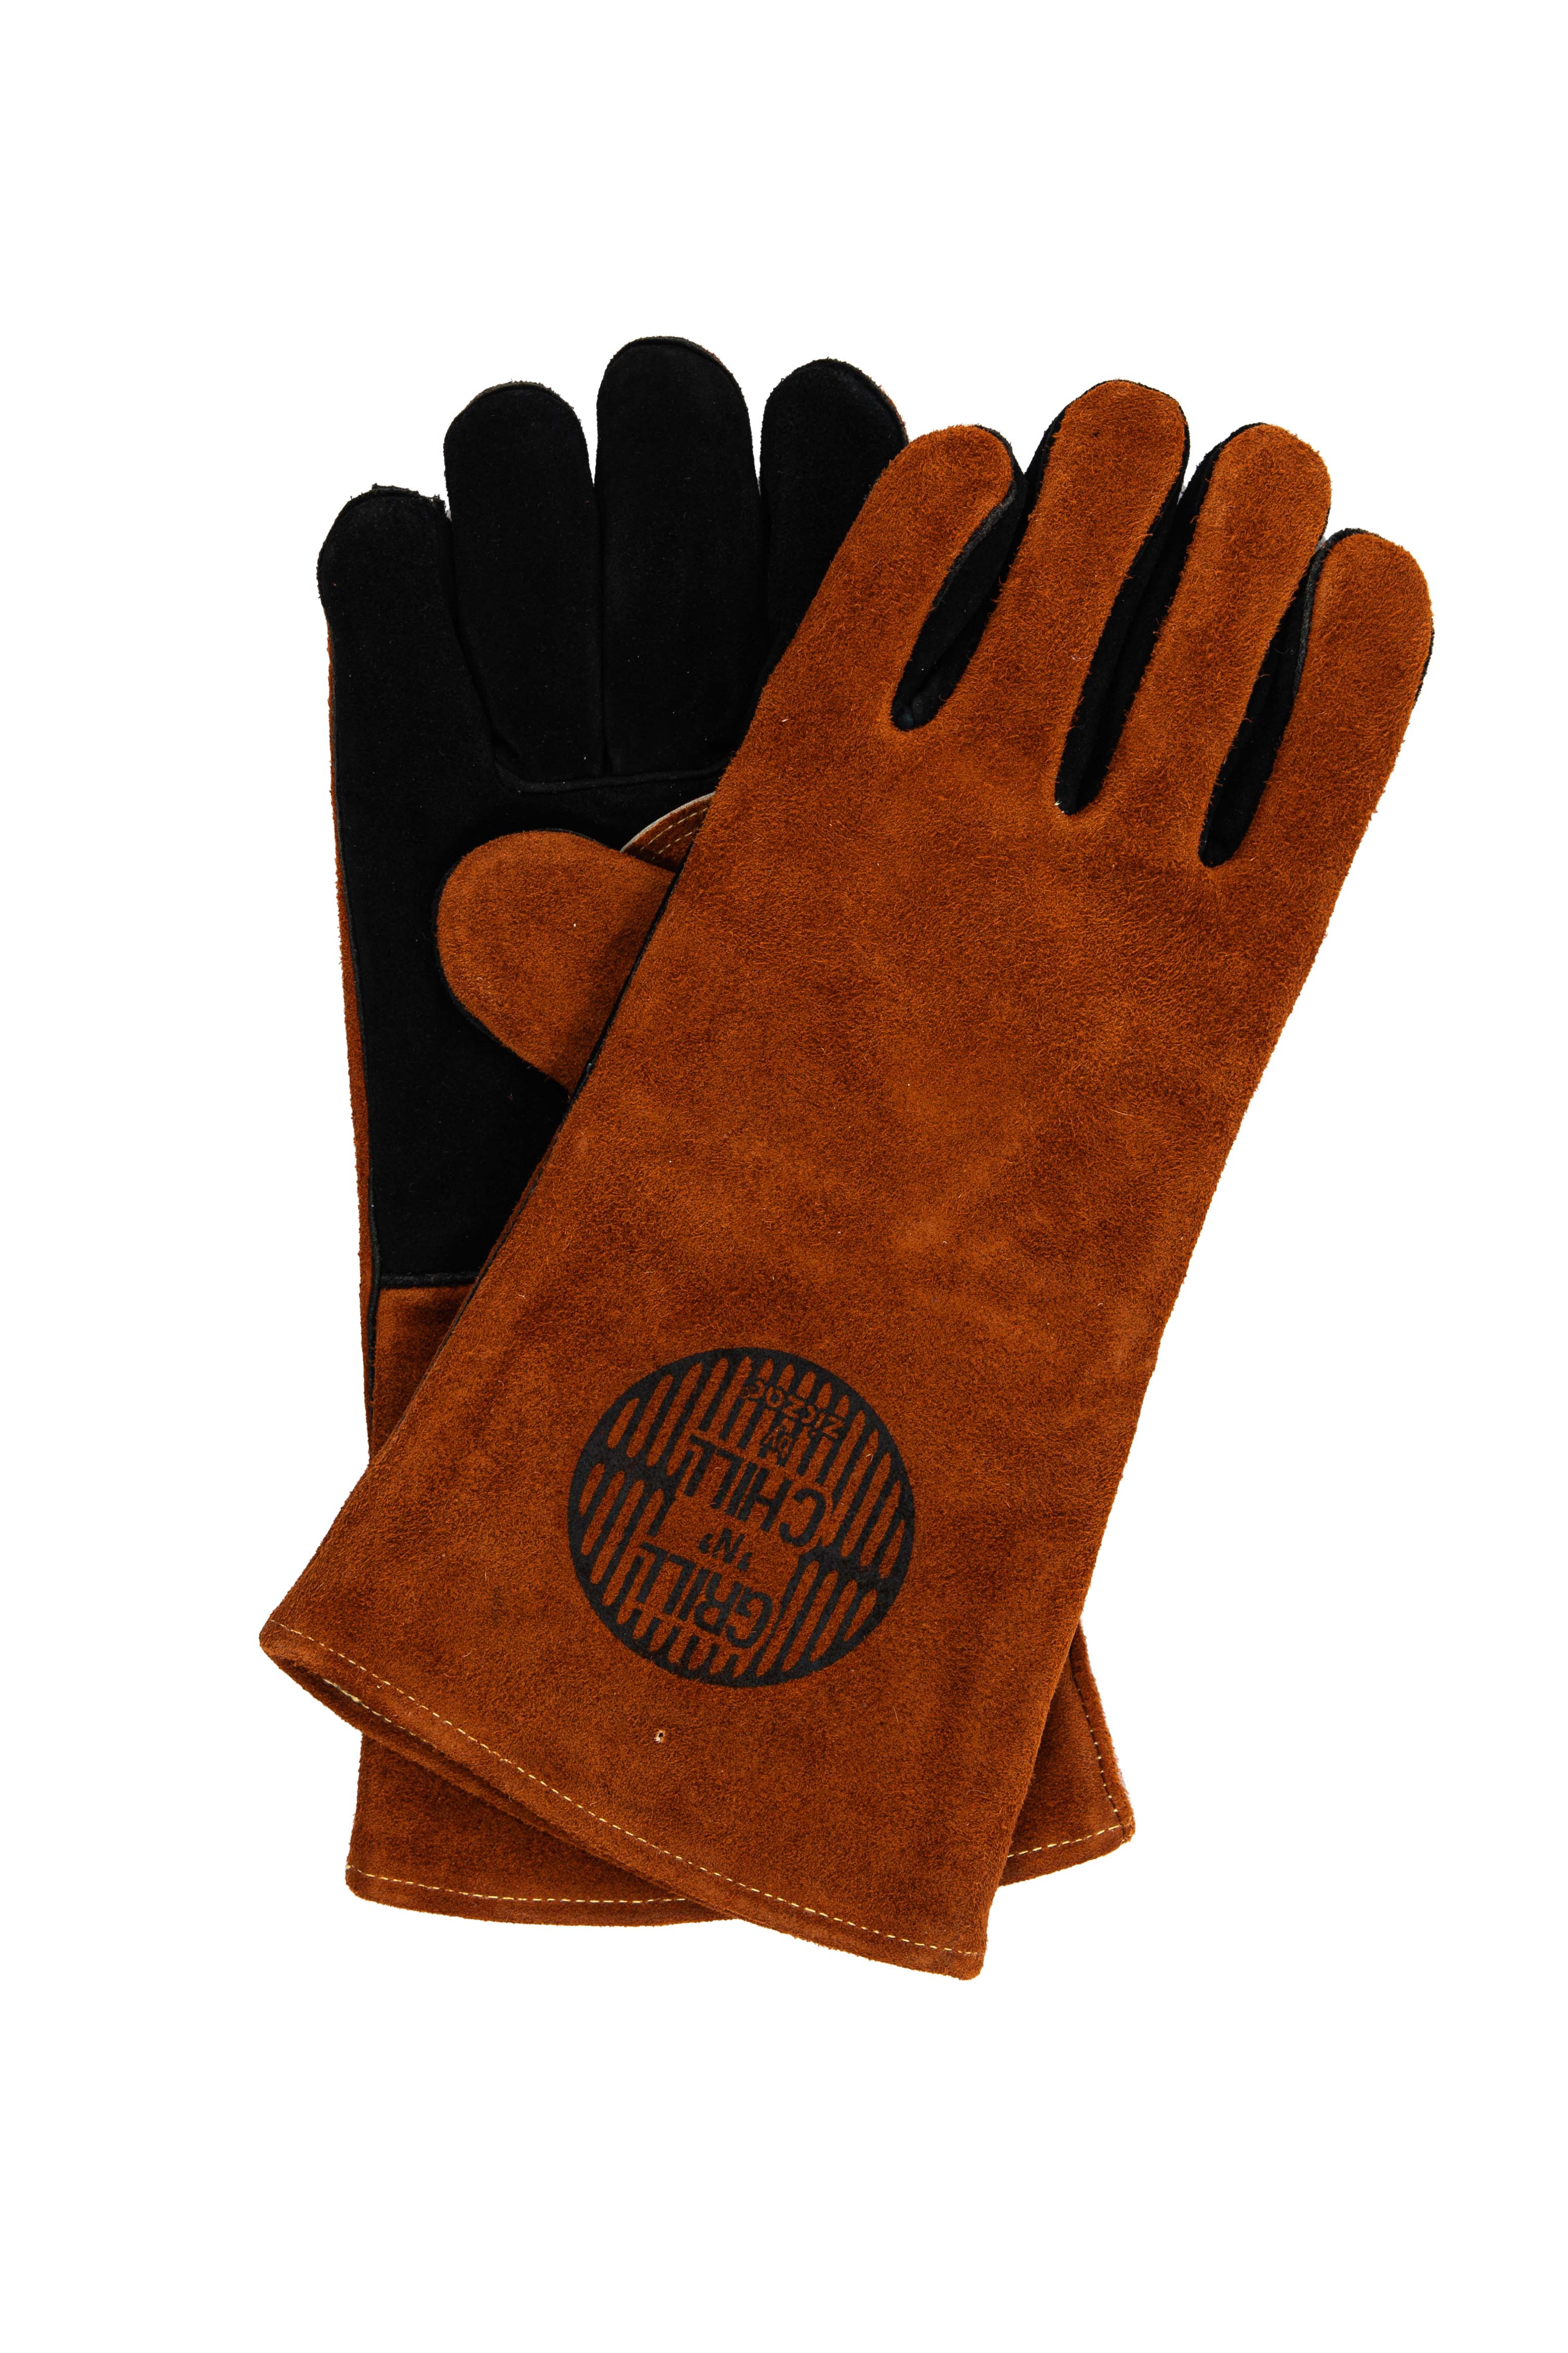 Set de 2 gants BBQ gants cuir - 36 x 19 cm - brun